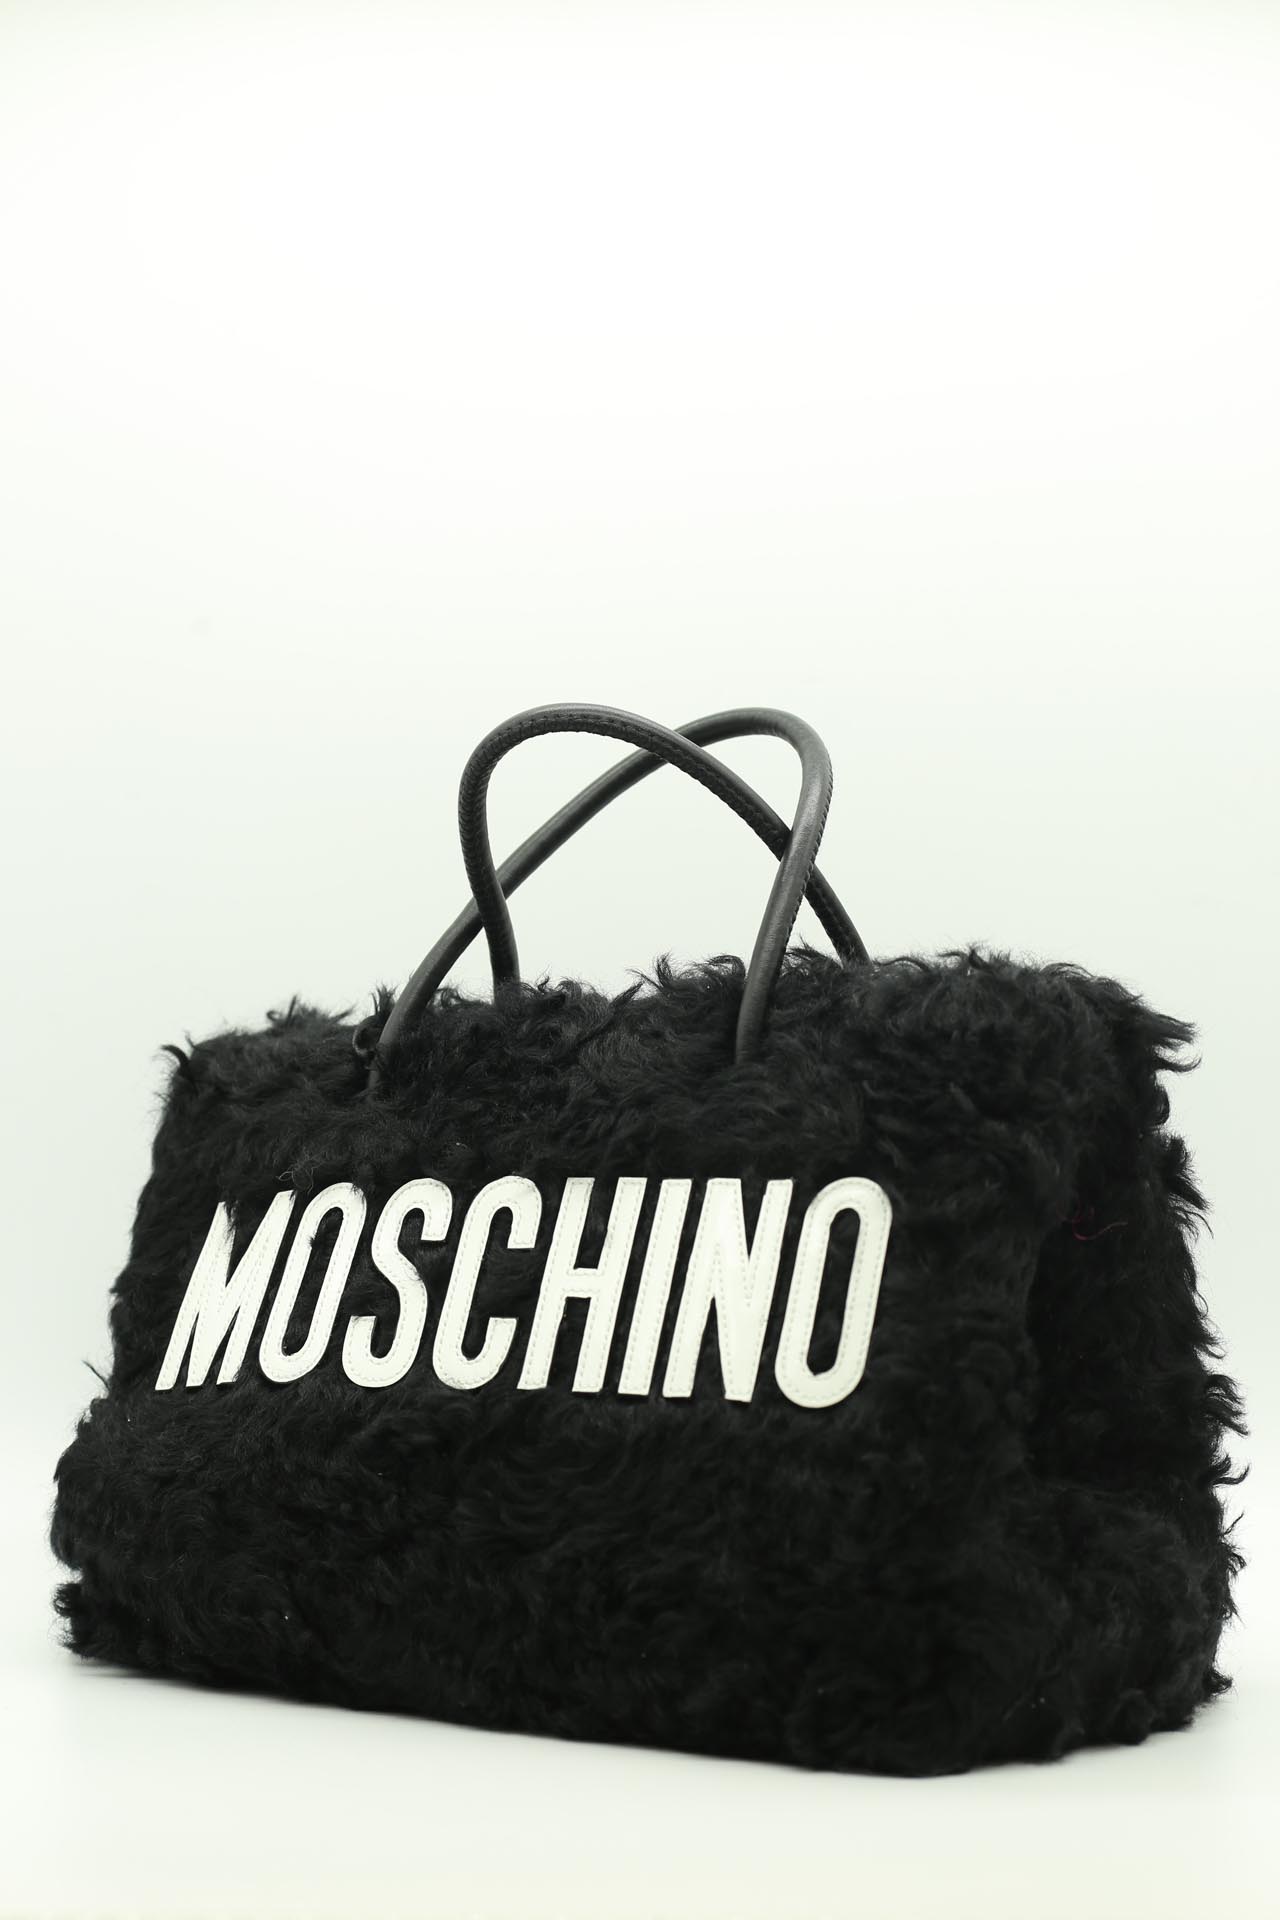 Moschino, Bag